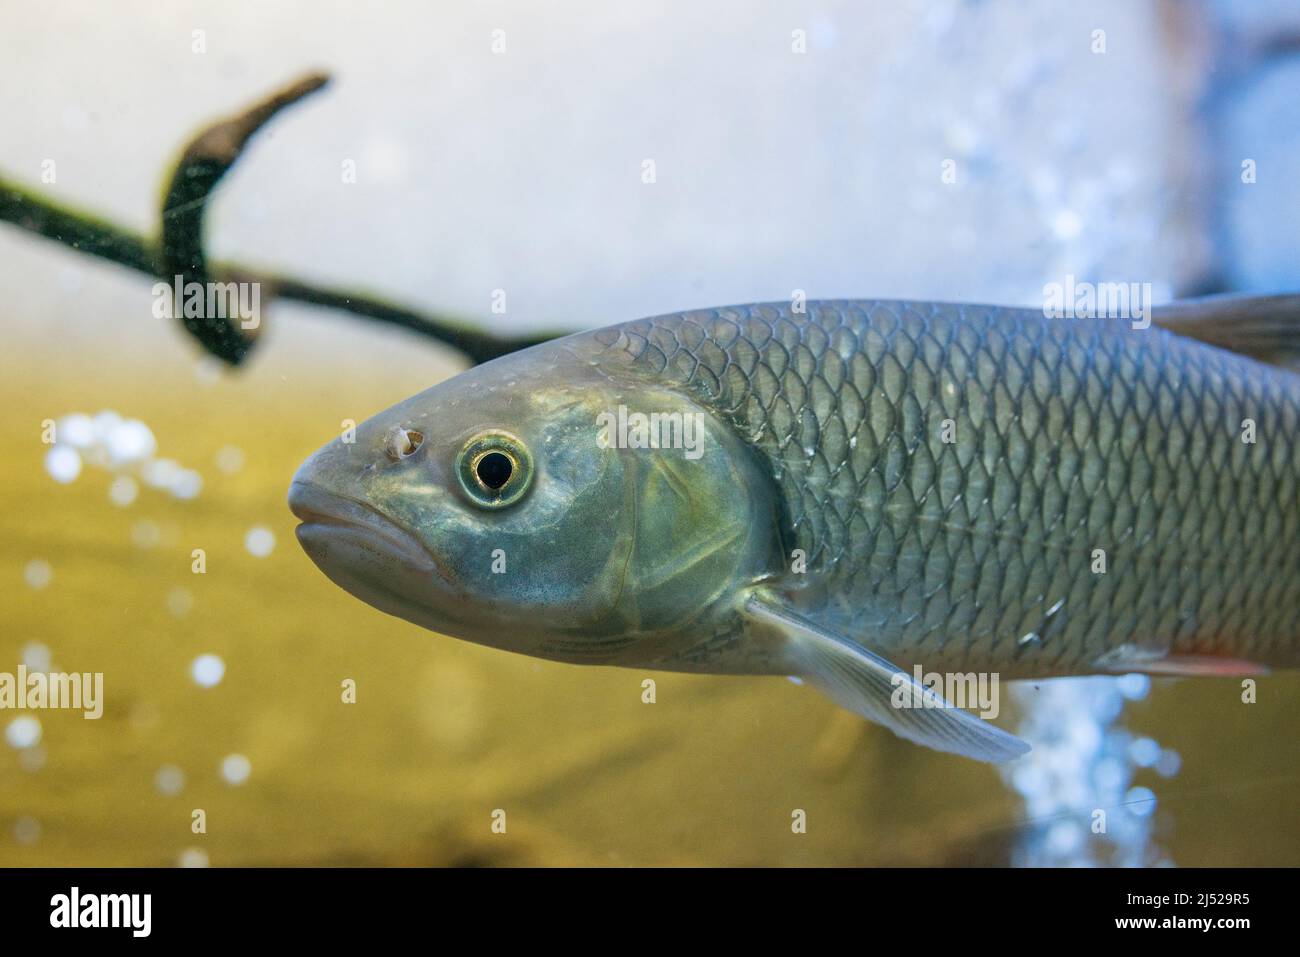 common chub, European chub, or simply chub (Squalius cephalus), is a European species of freshwater fish in the carp family Cyprinidae. Stock Photo